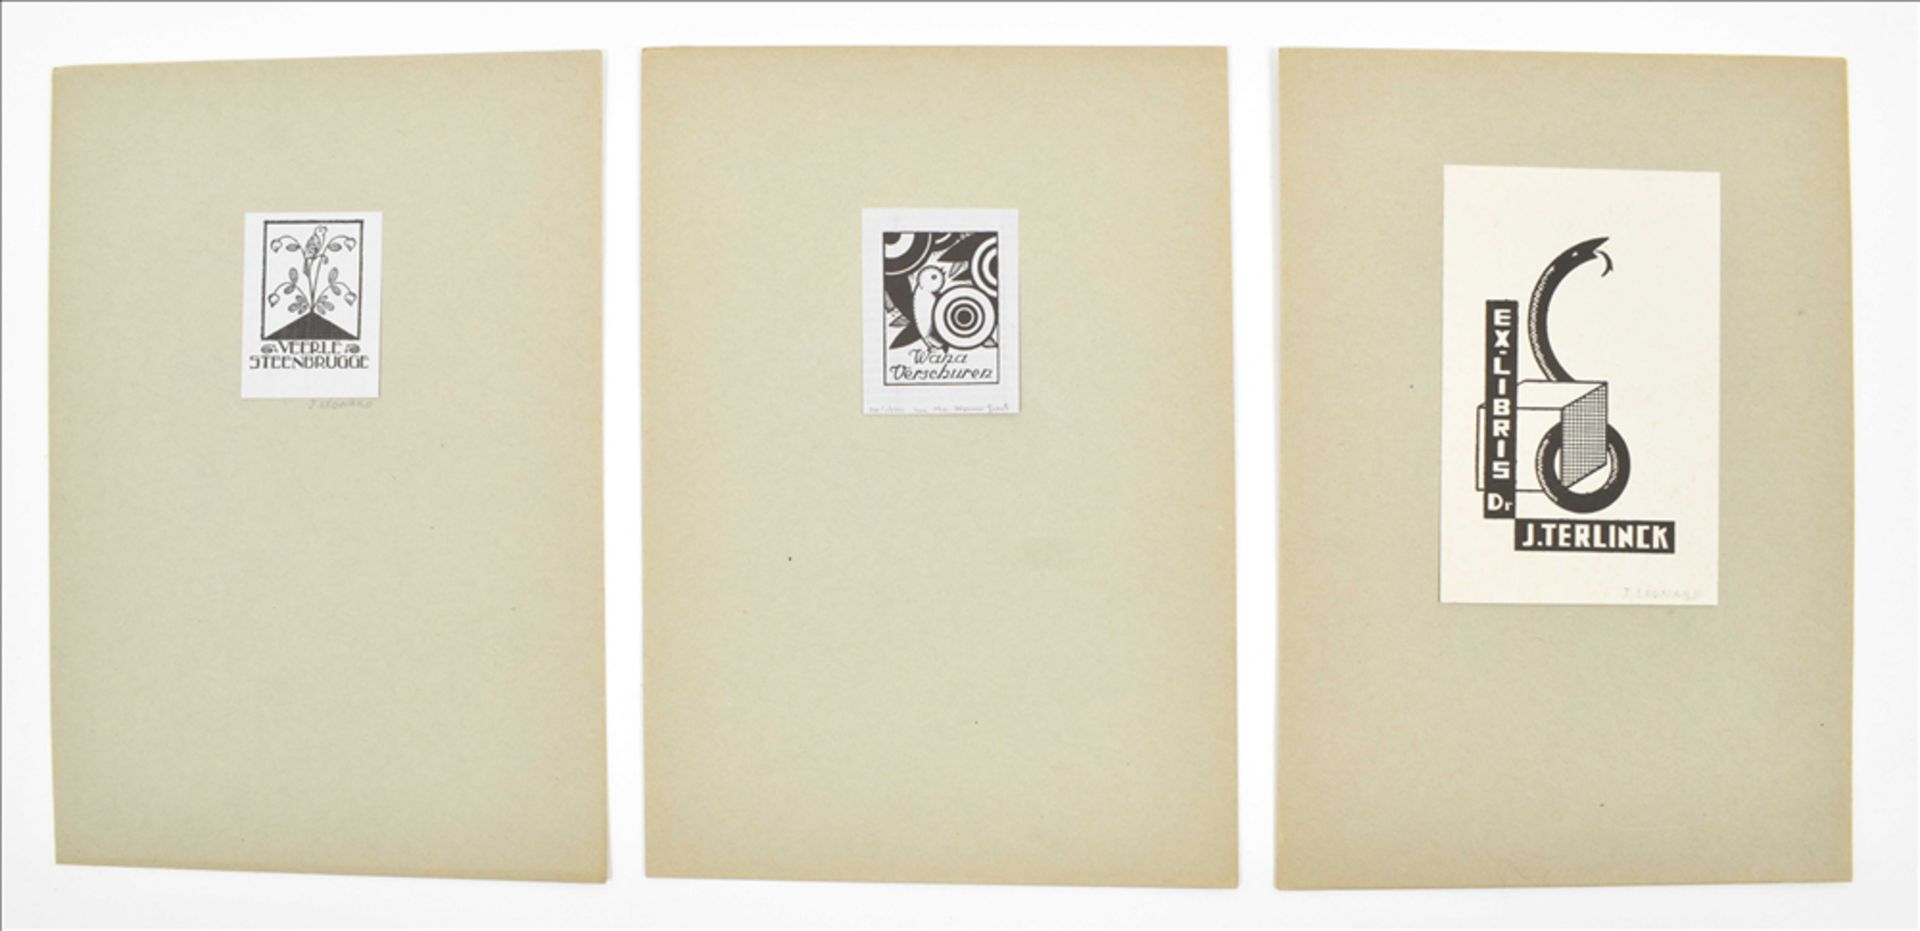 Ten (rare) items by Studio Novio: (1) Catalogus der Tentoonstelling van Studio Novio - Image 5 of 10